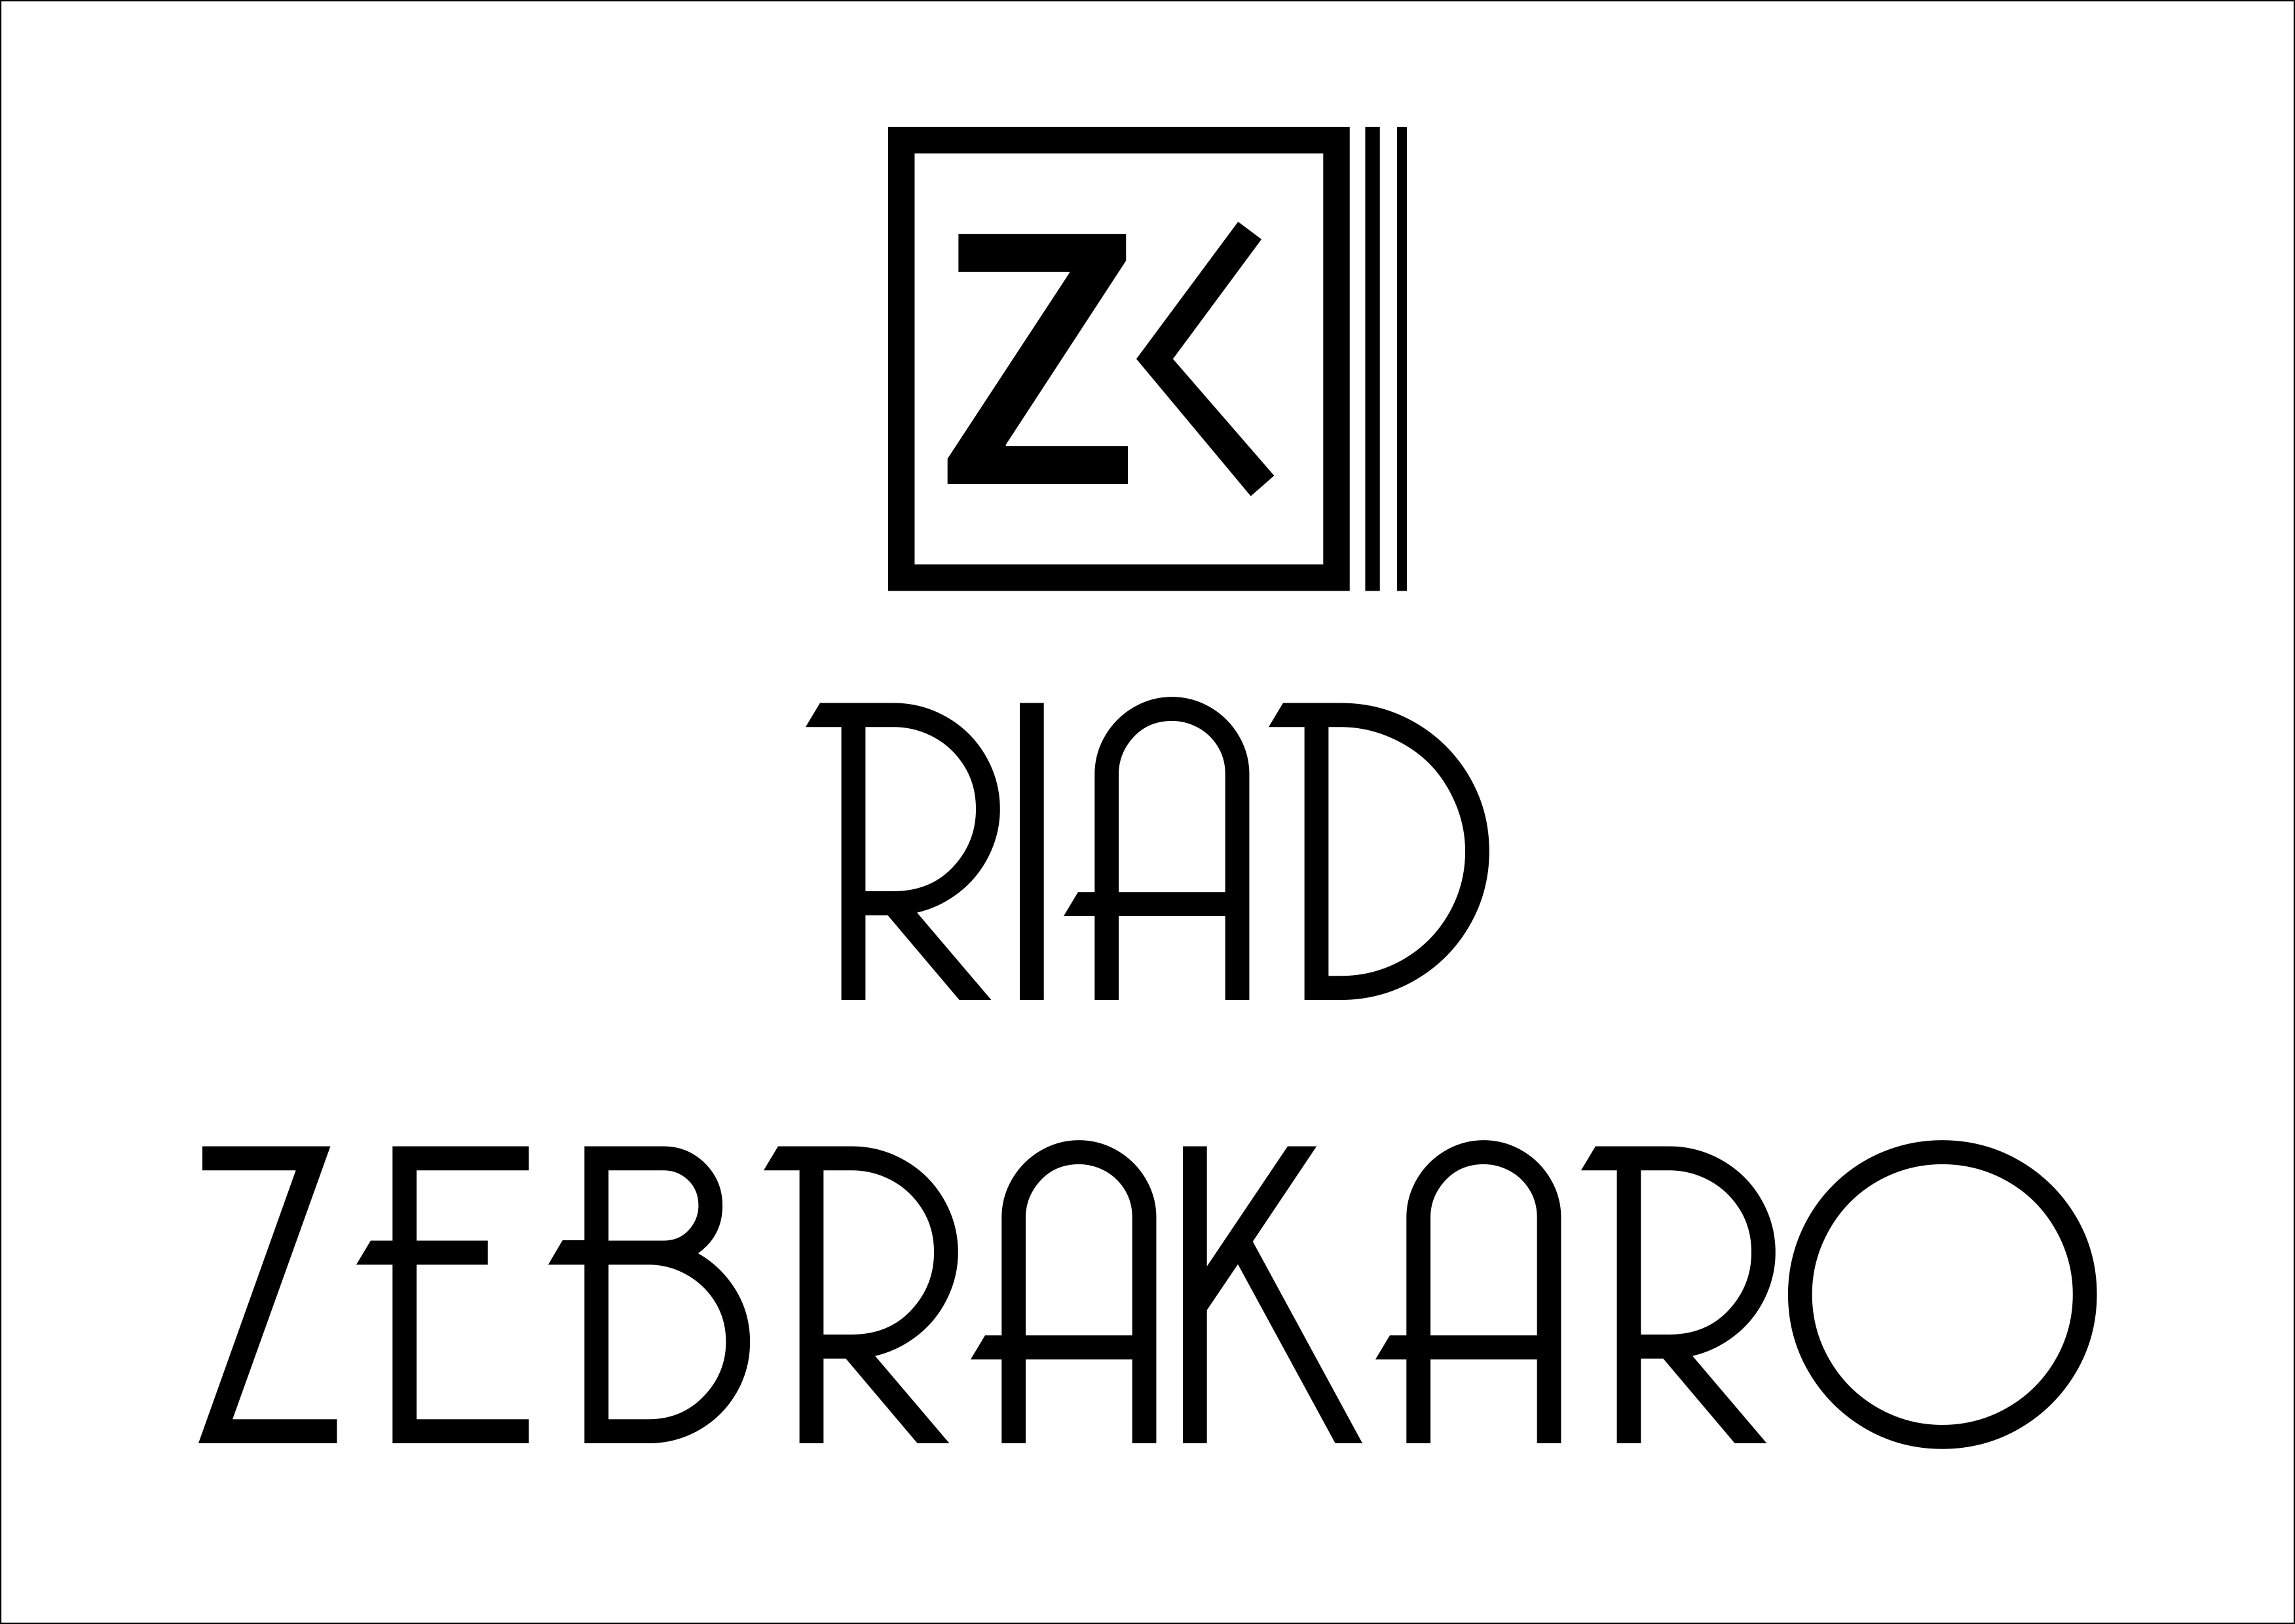 Le Riad Zebrakaro